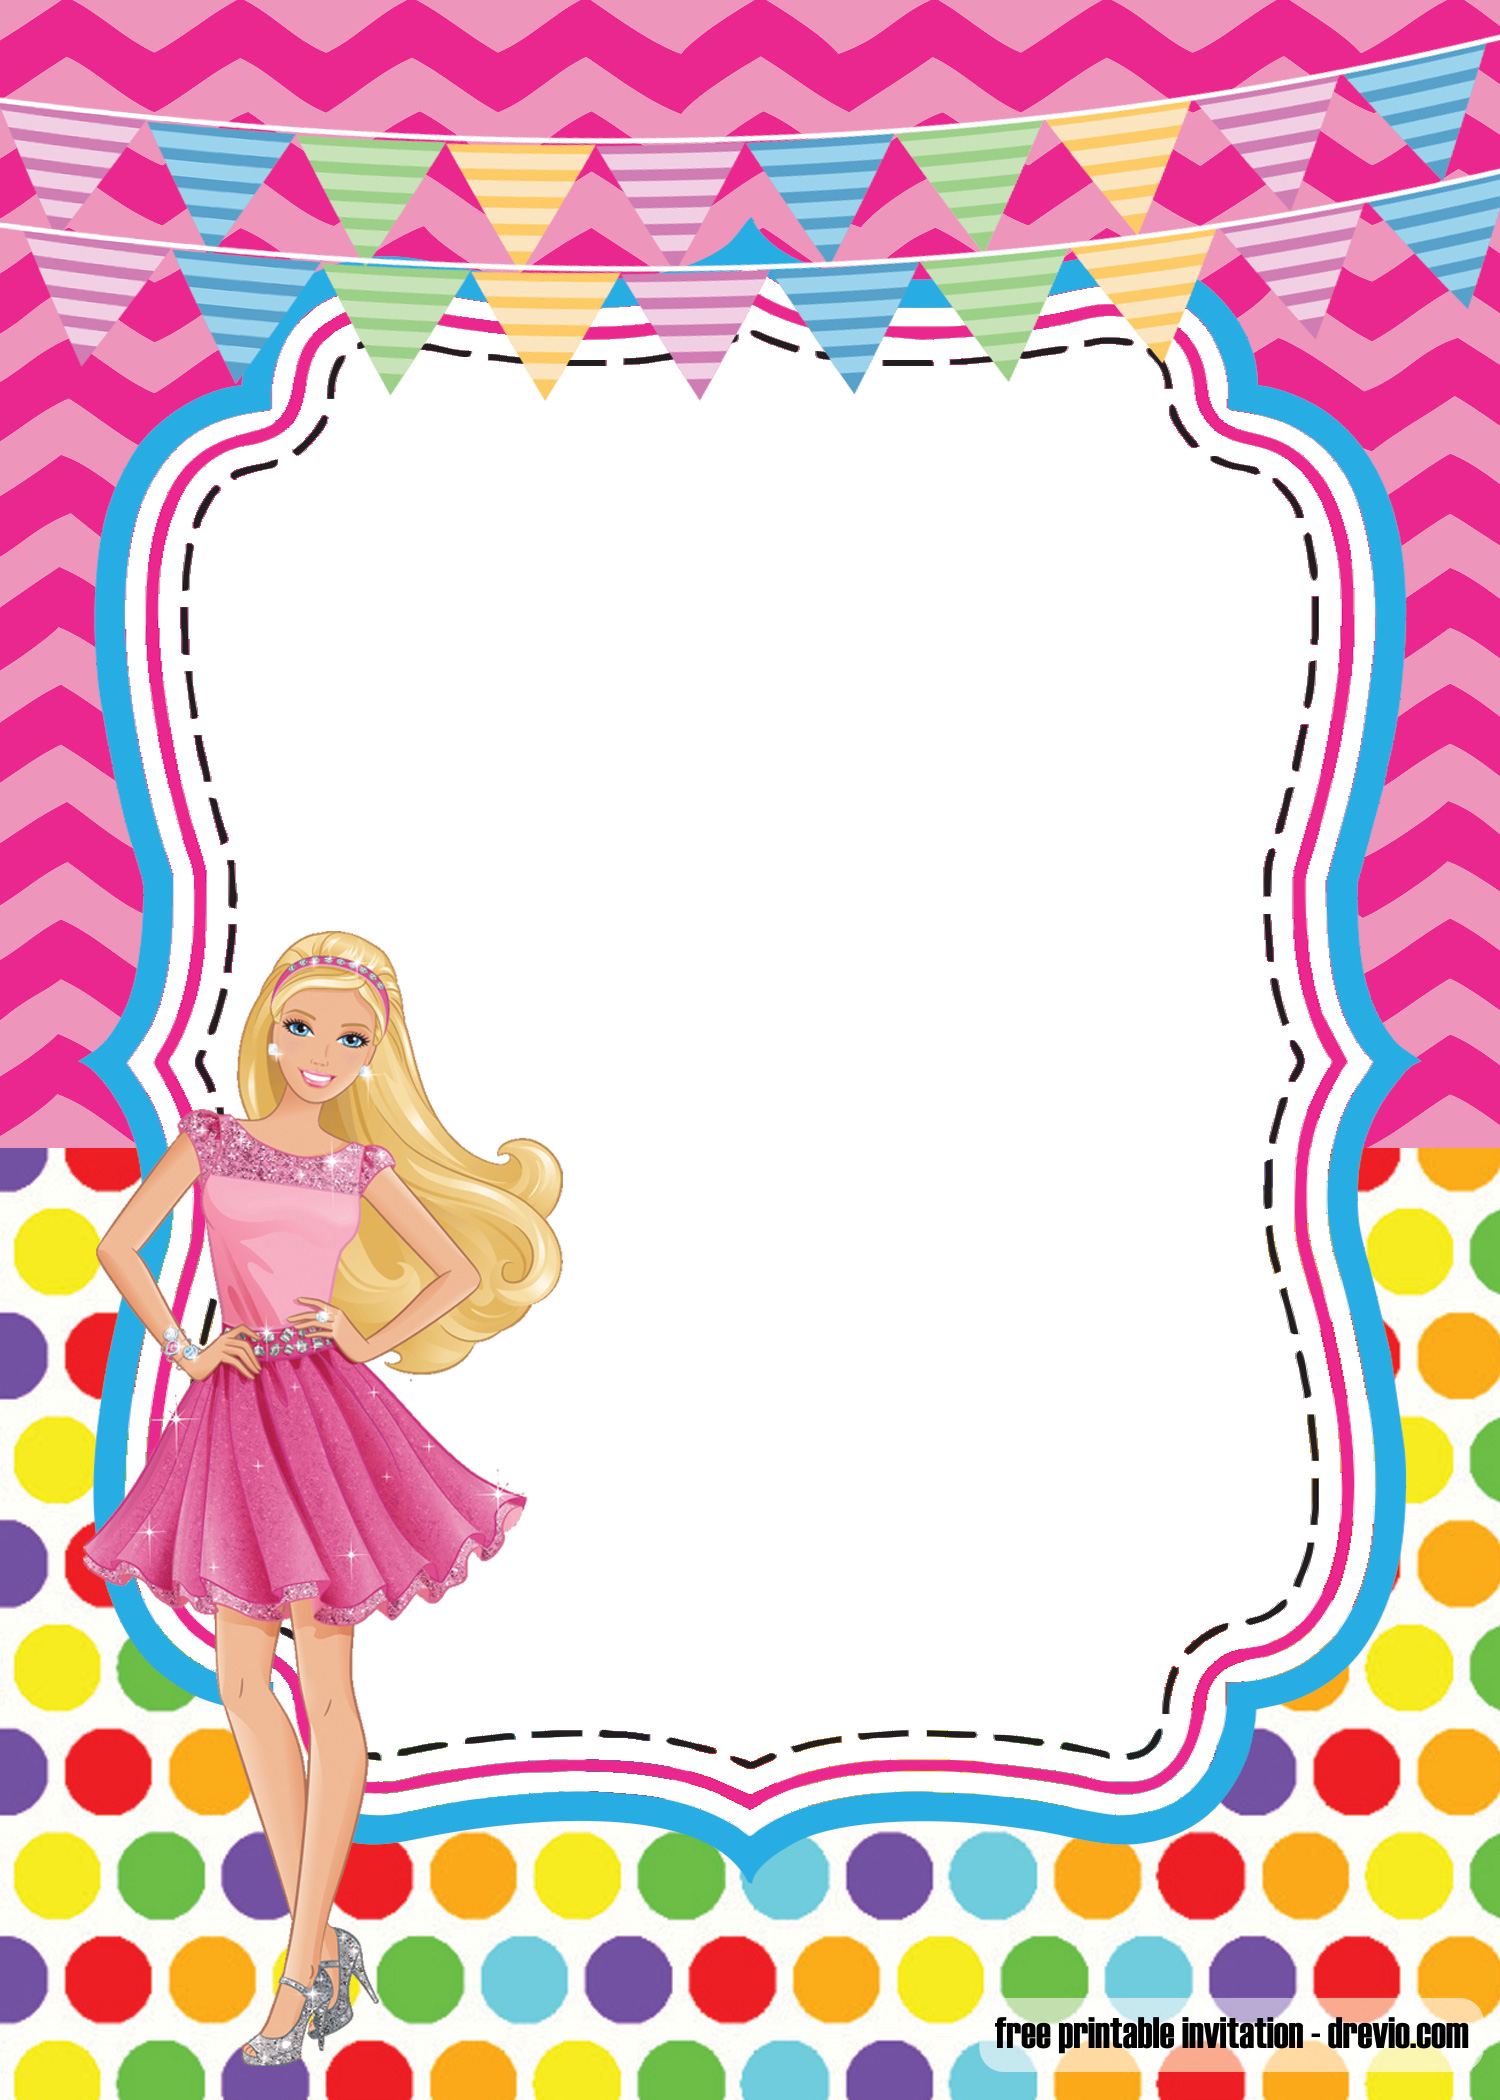 Free Printable Barbie Party Invitations Printable Templates